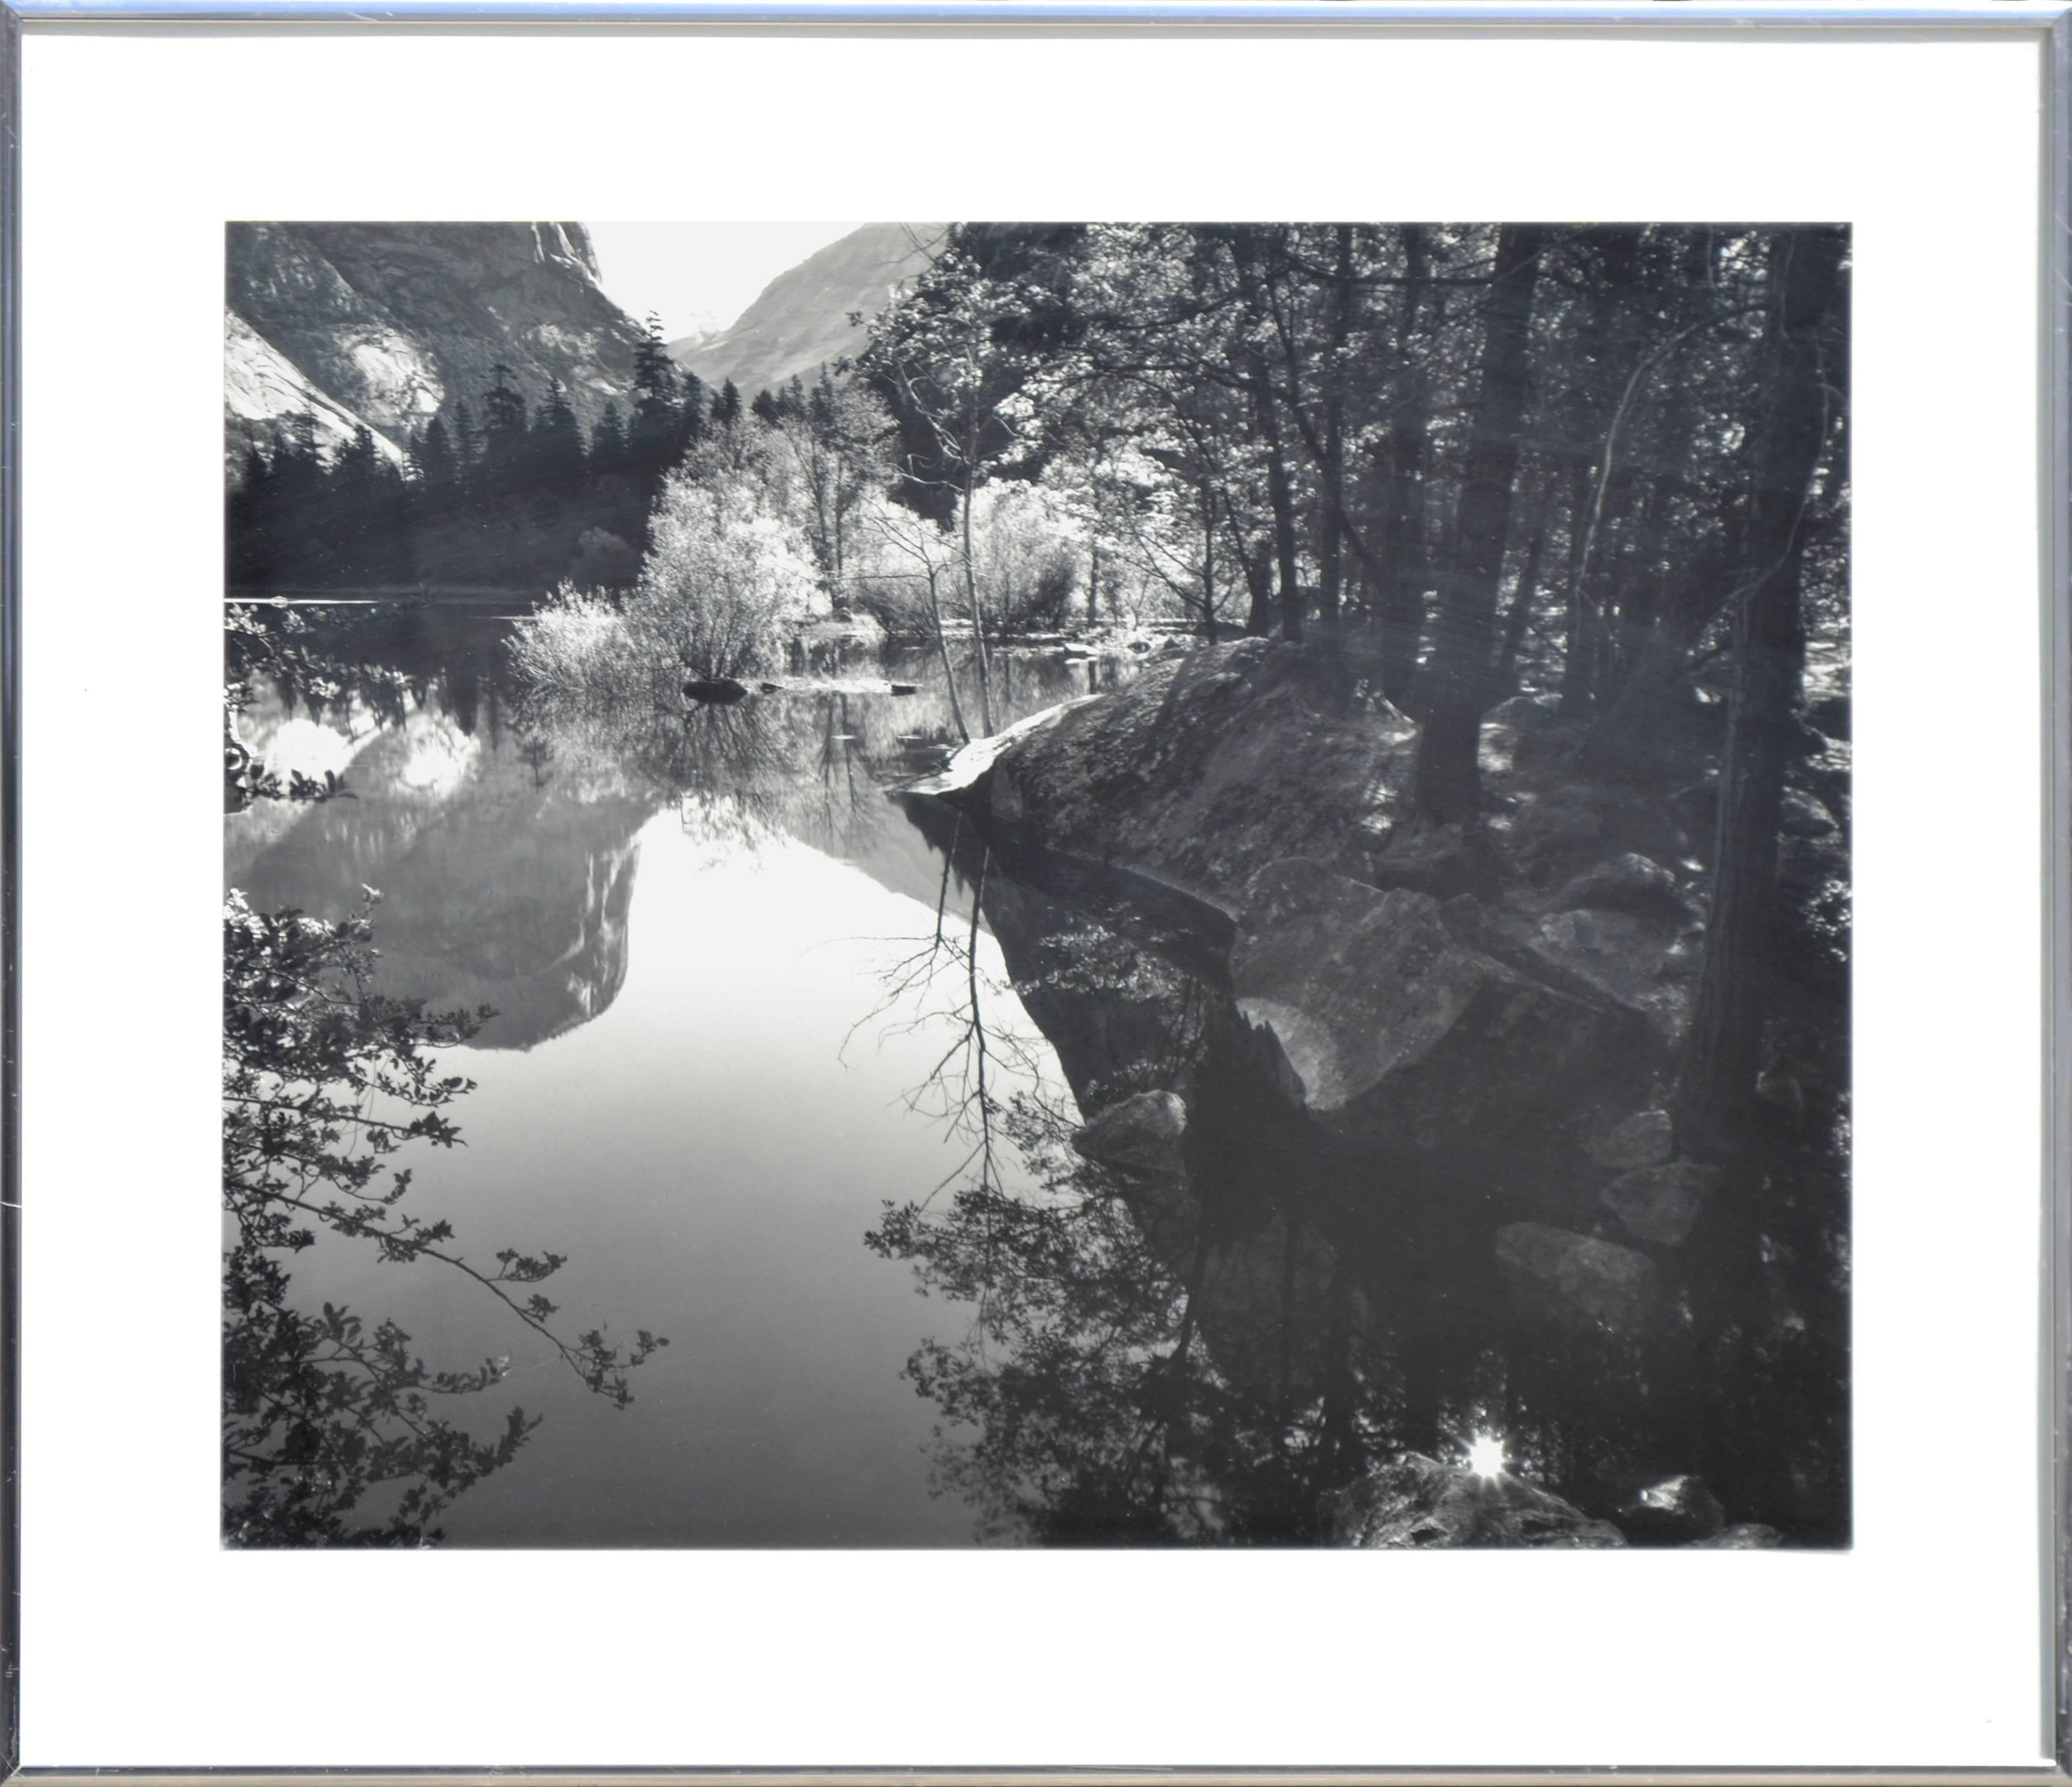 Sierra Mountain Reflections - Black & White Landscape Photograph